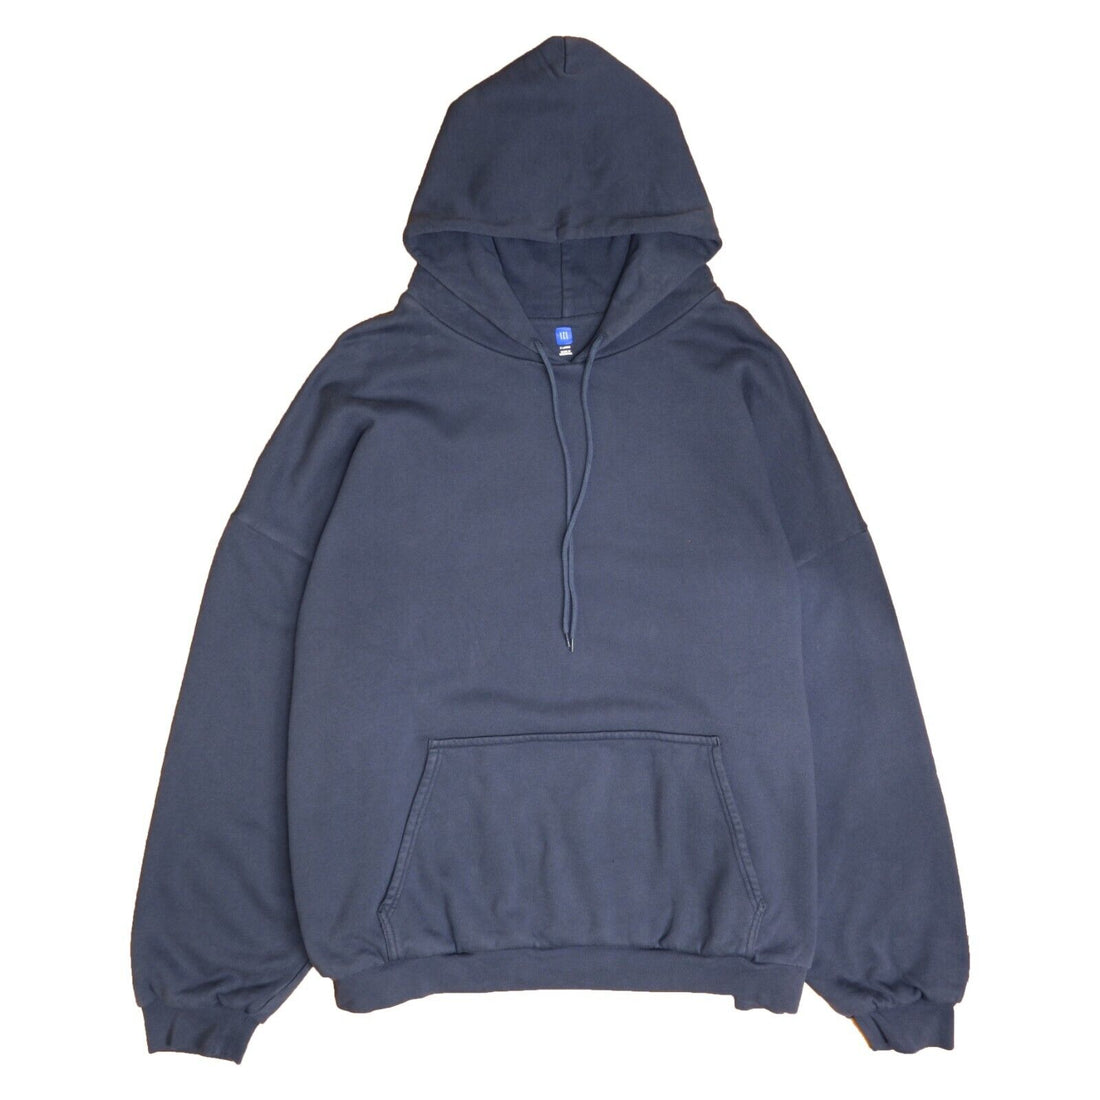 Yeezy Gap Unreleased Pullover Sweatshirt Hoodie Size XL Navy Blue